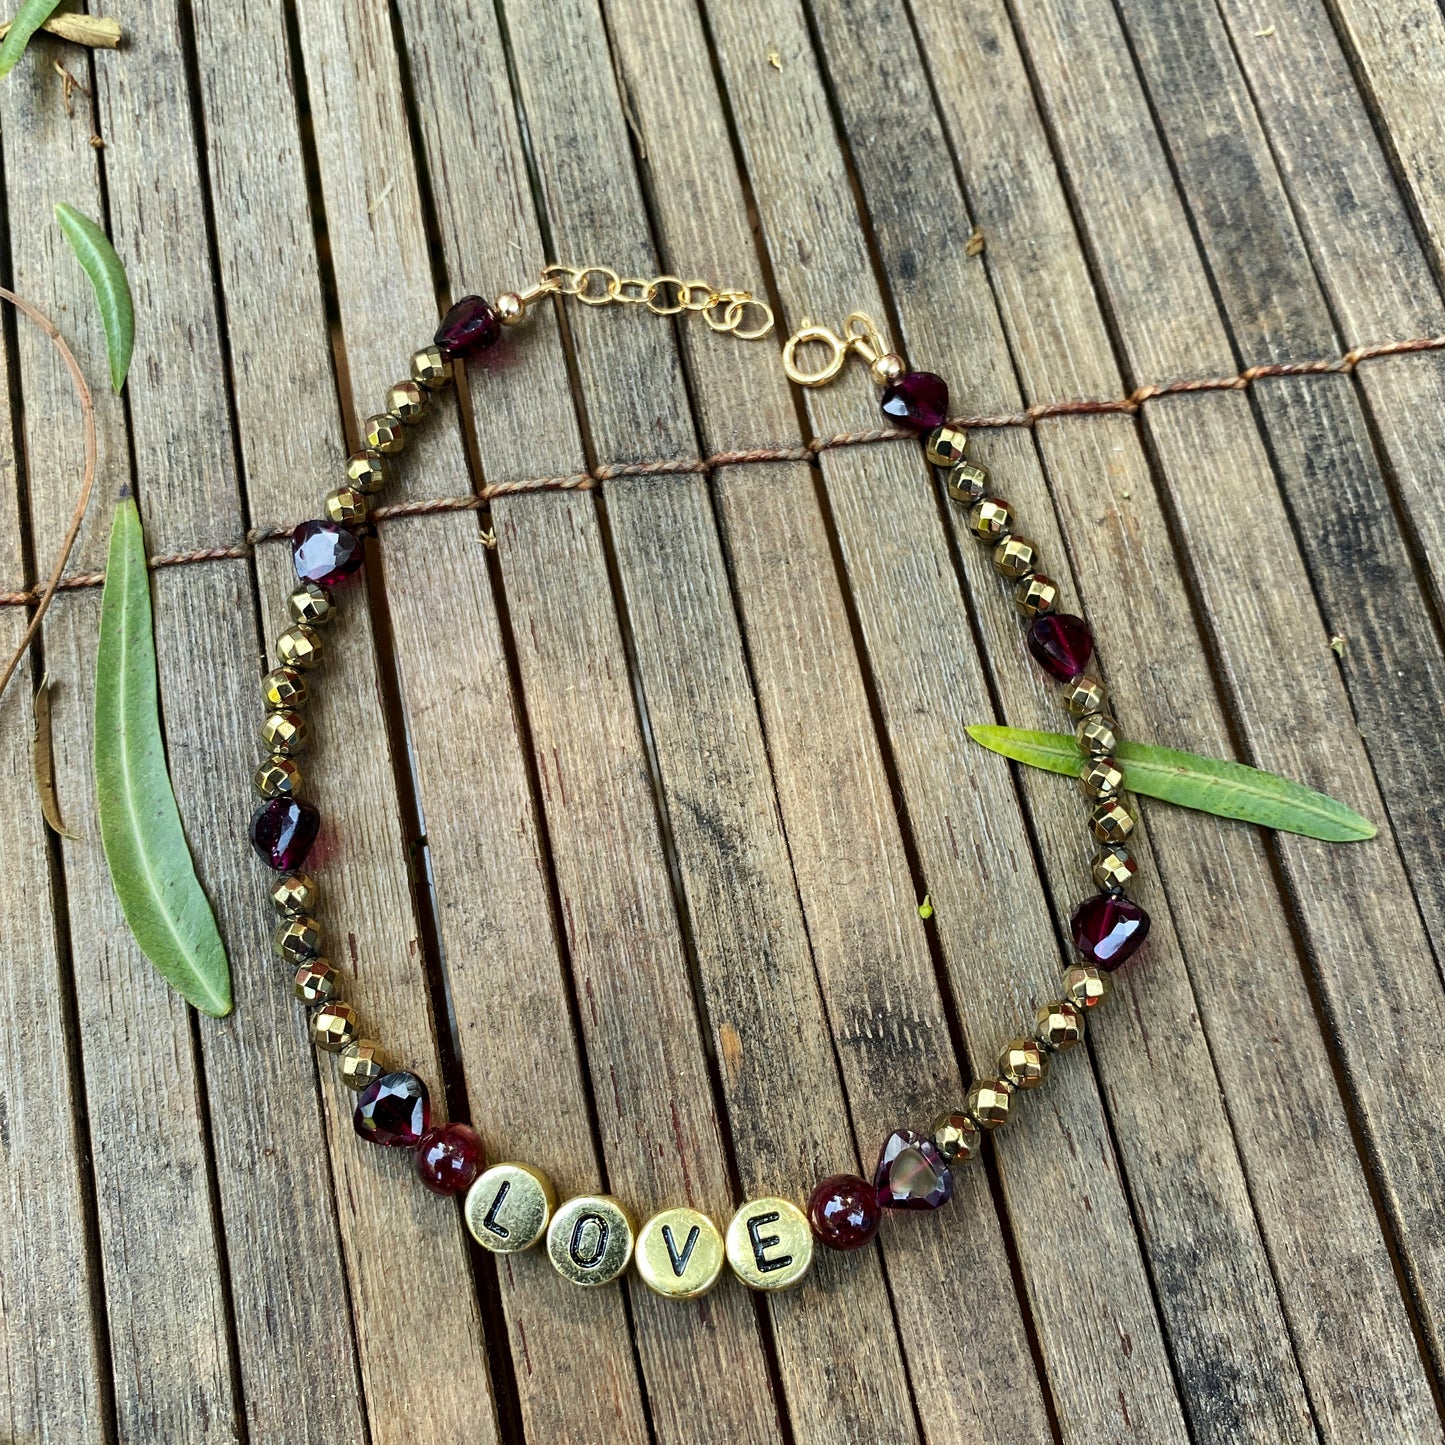 Garnet and hematite beaded gemstone “love” anklet with heart shaped garnets